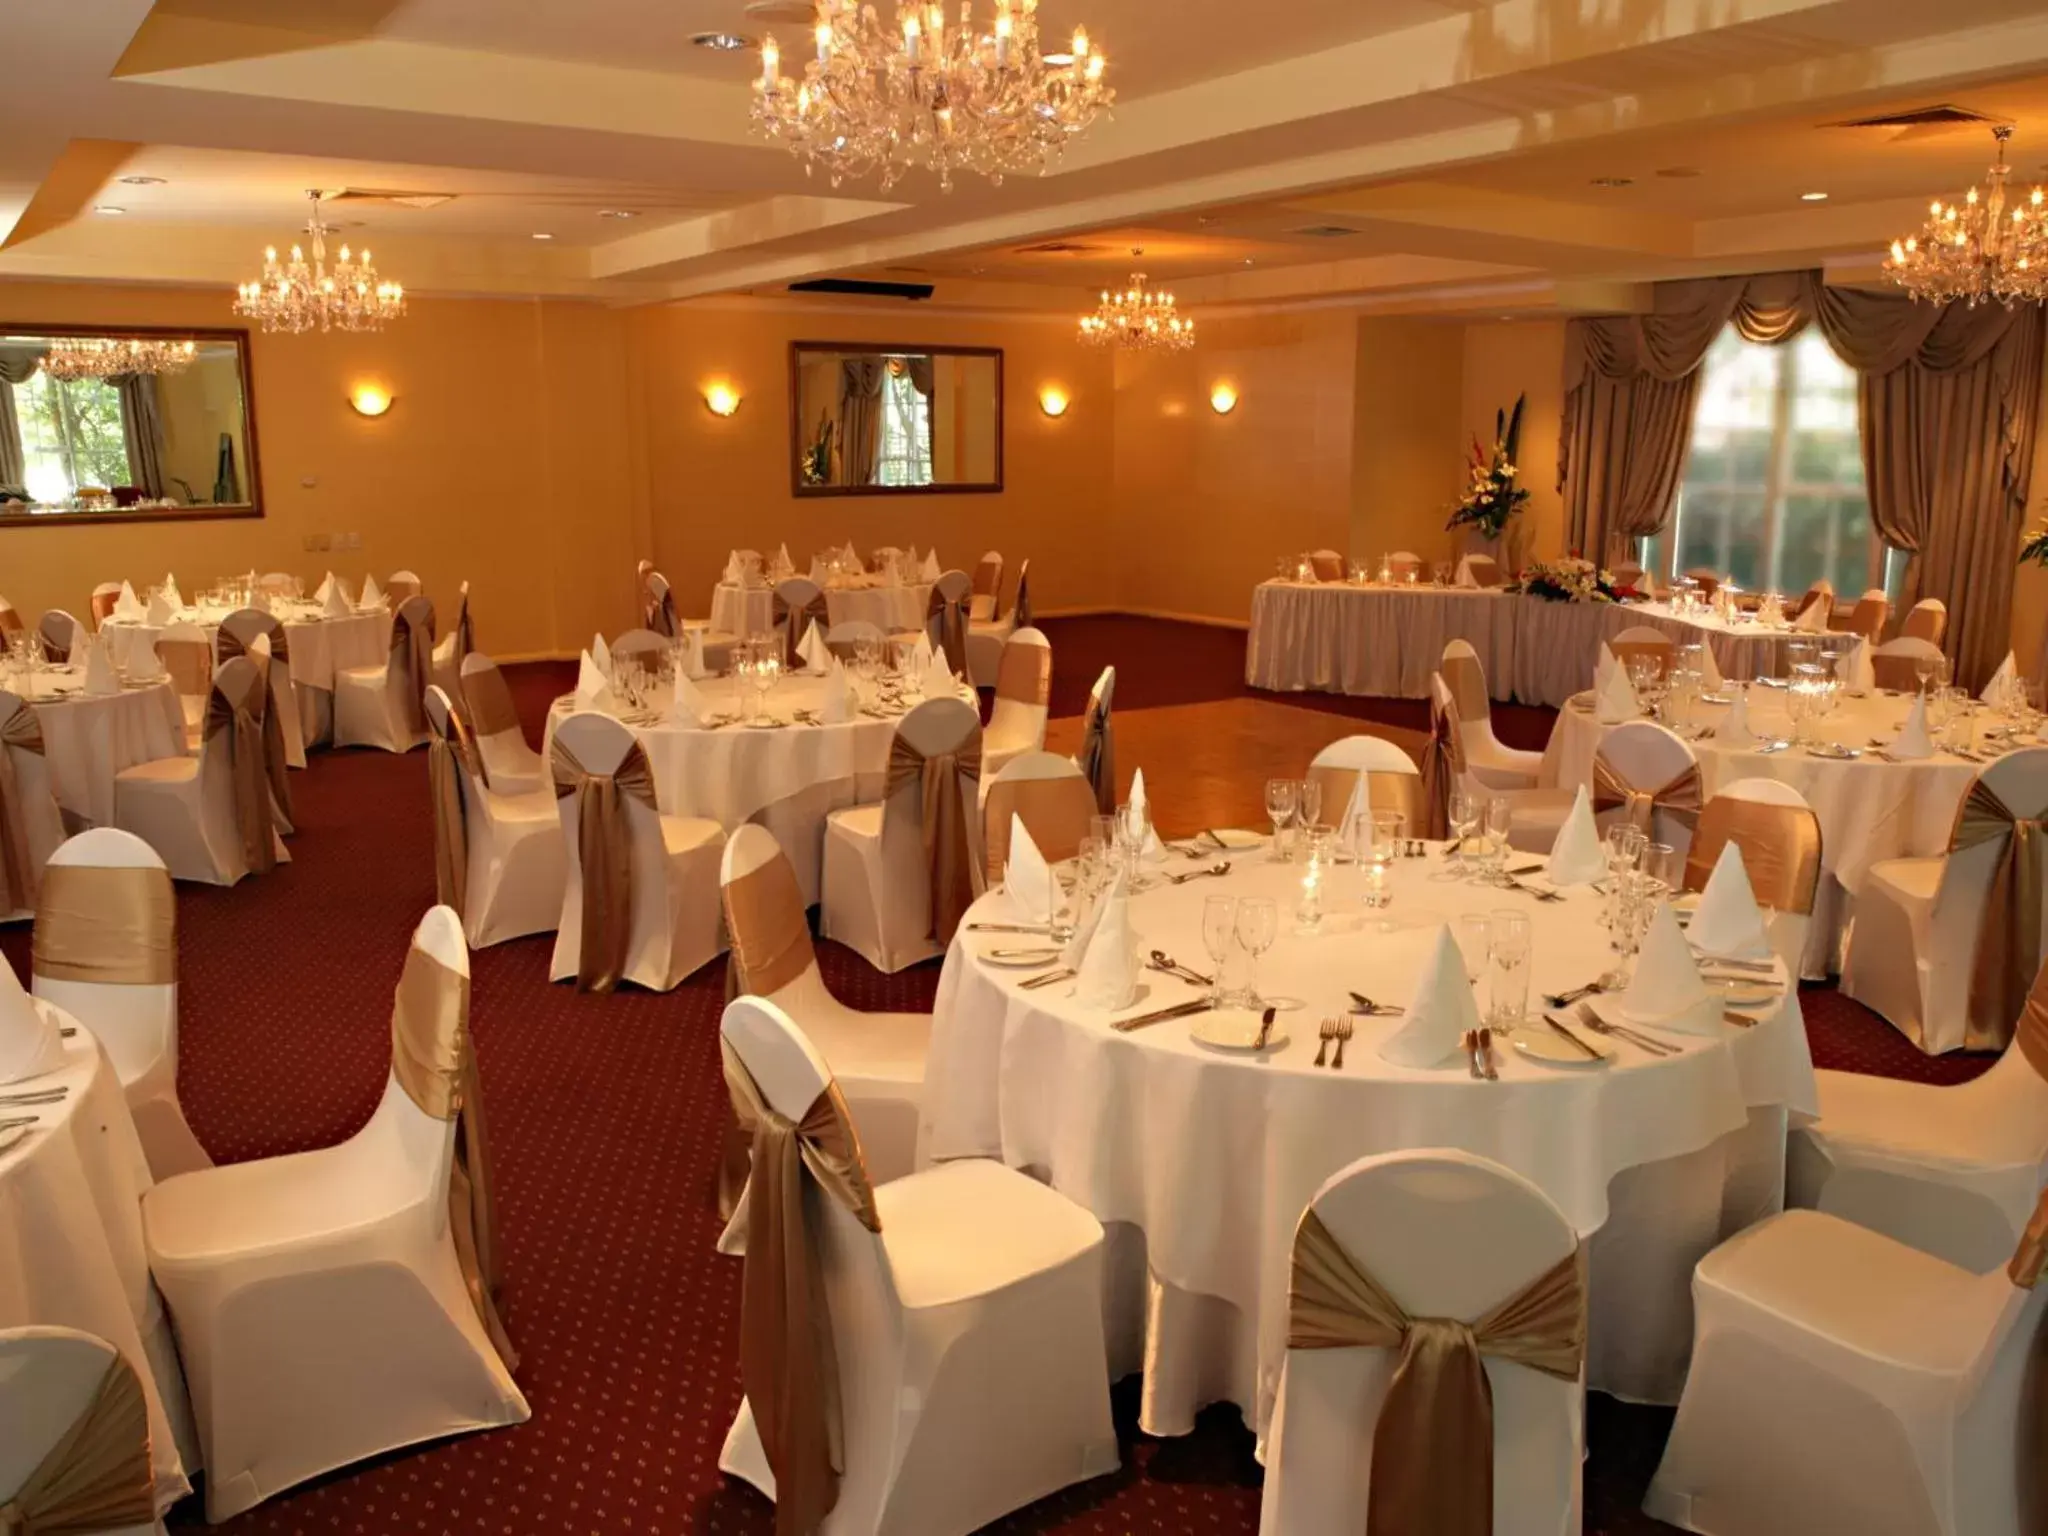 Banquet/Function facilities, Banquet Facilities in Beau Monde International